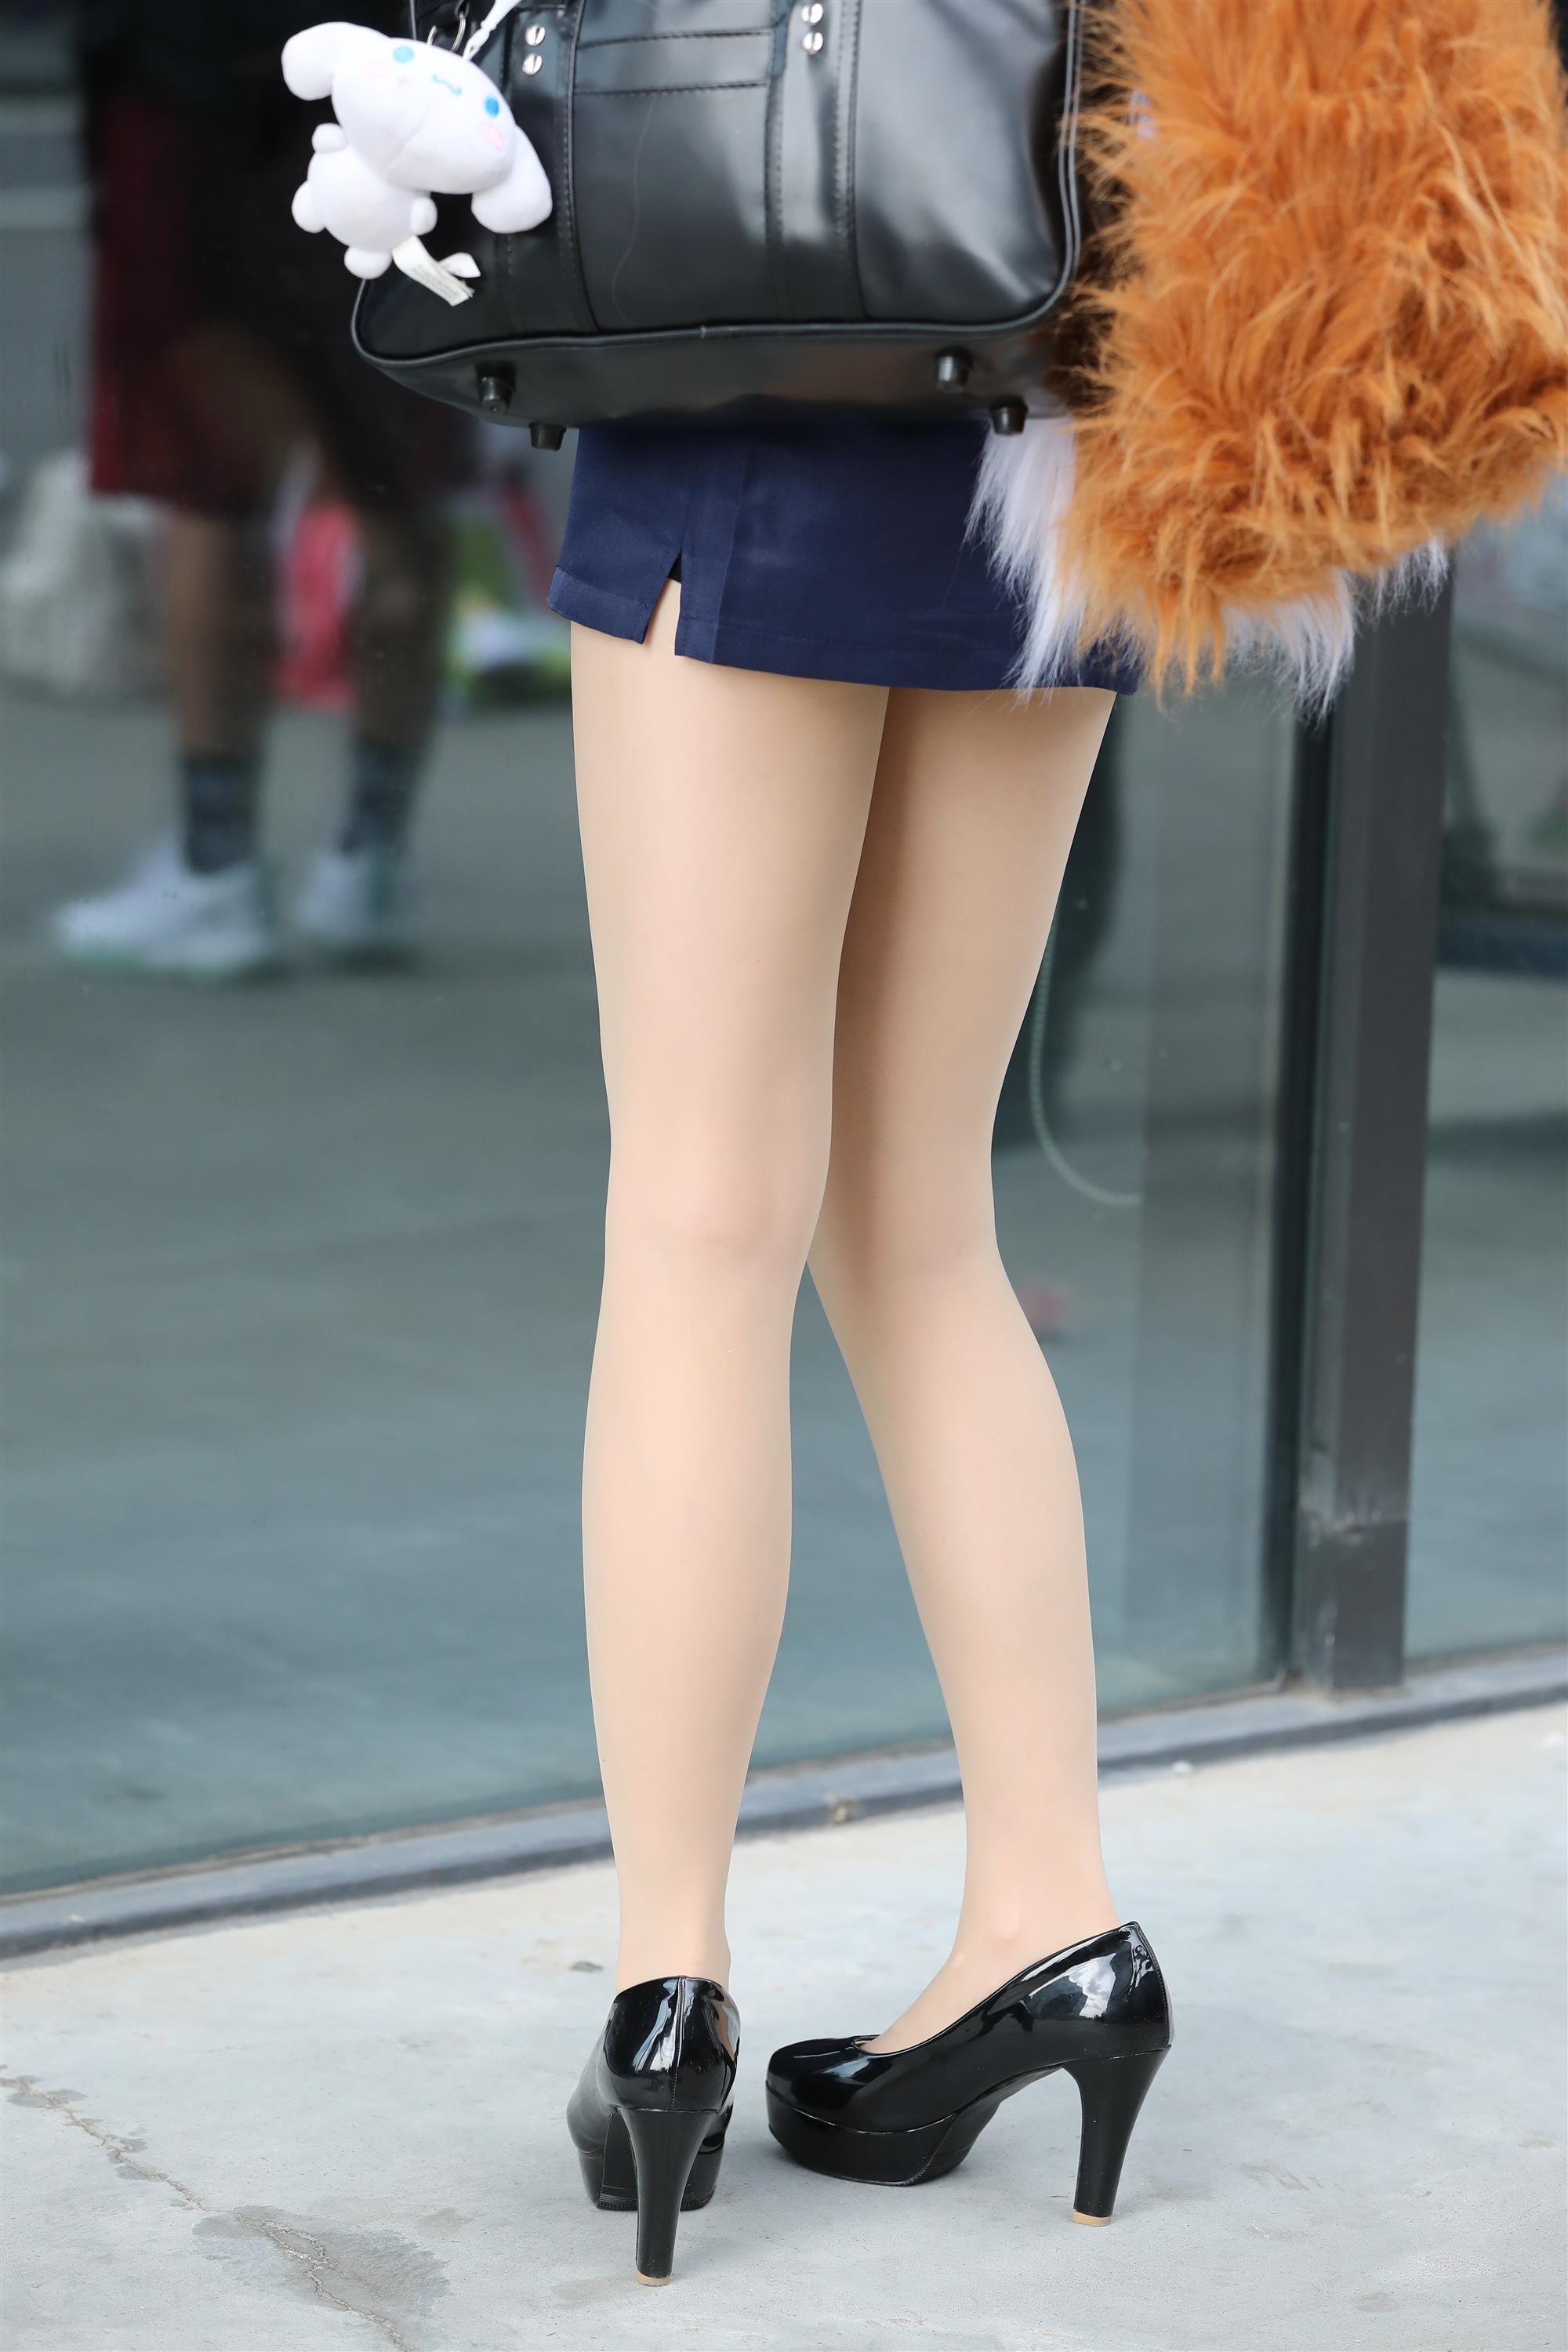 Street cosplay girl - 35.jpg